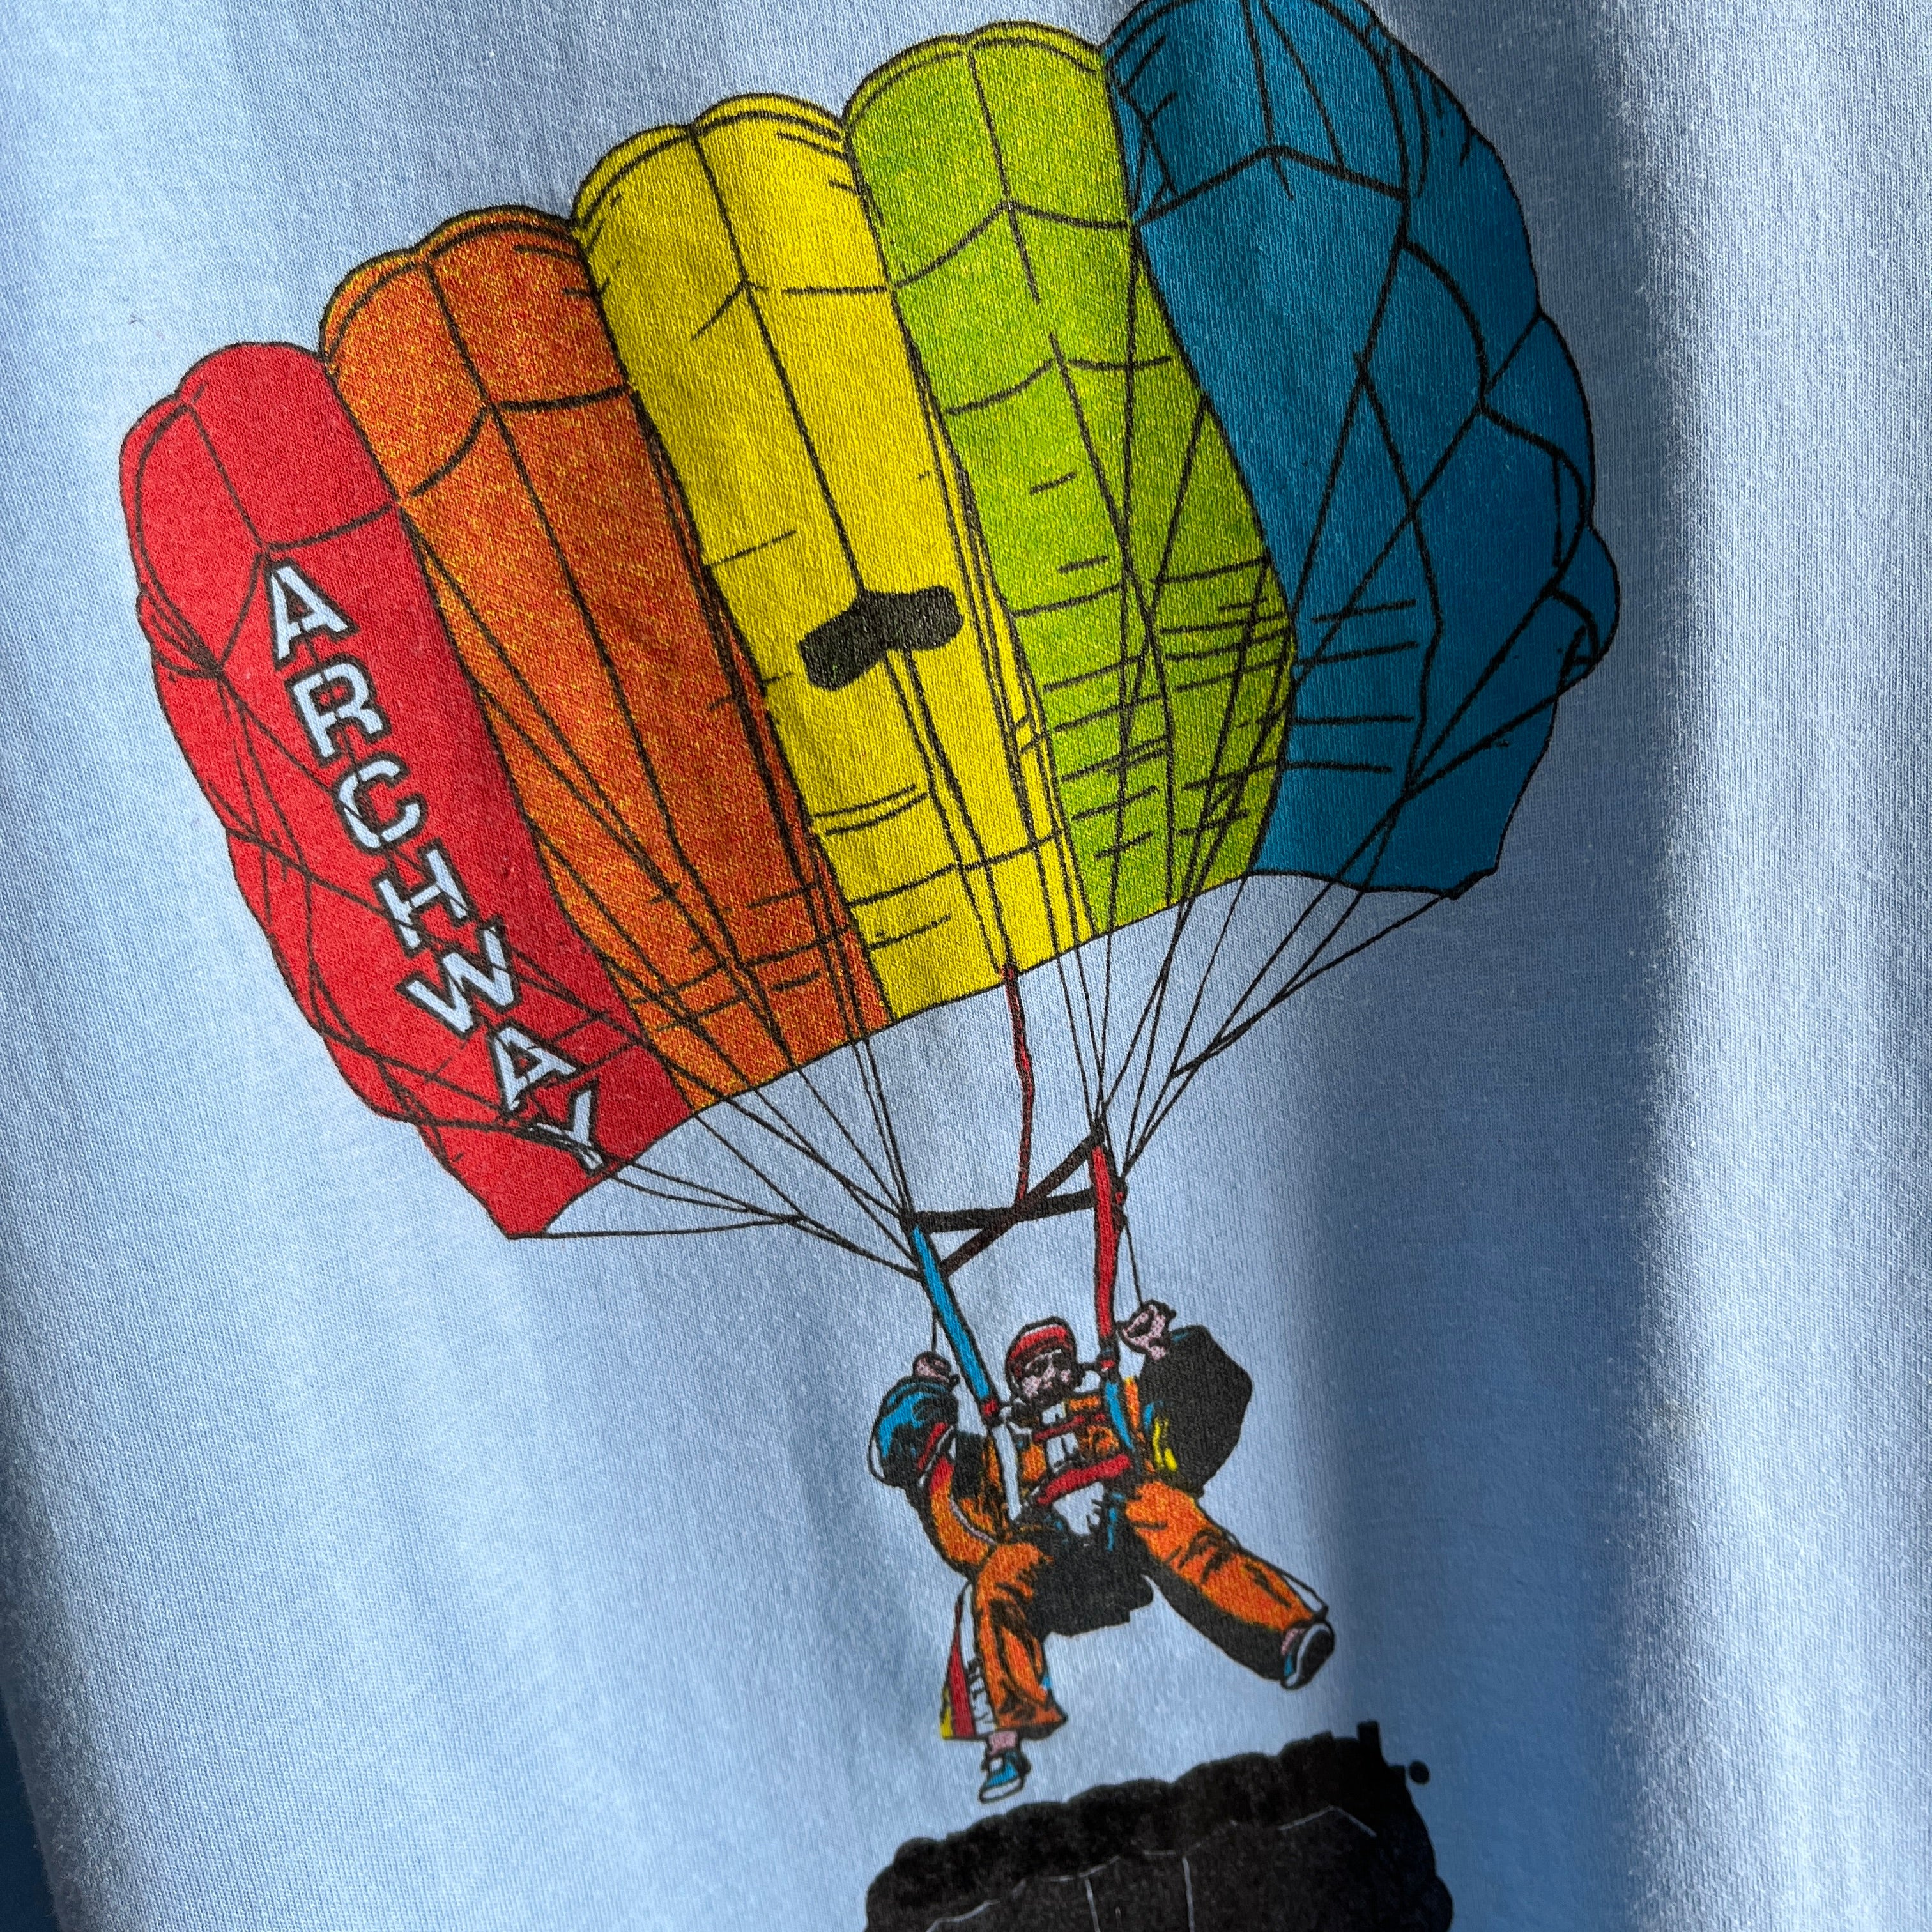 1980s Archway Vandalia, Illinois Parachuting T-Shirt by Screen Stars